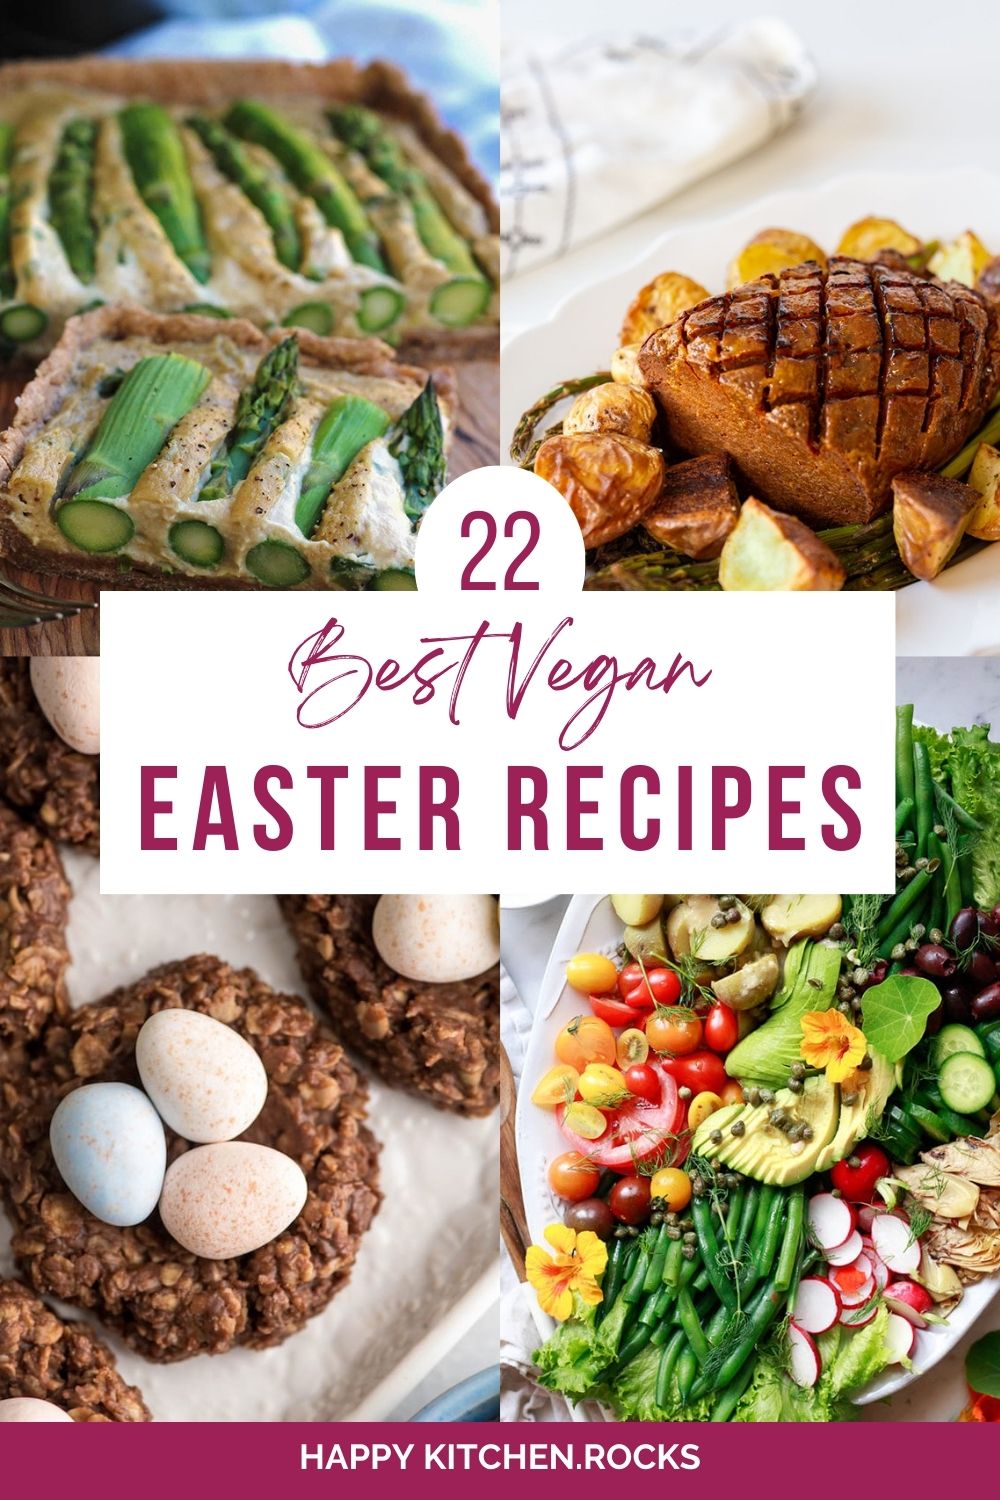 Best Vegan Easter Recipes Collage.